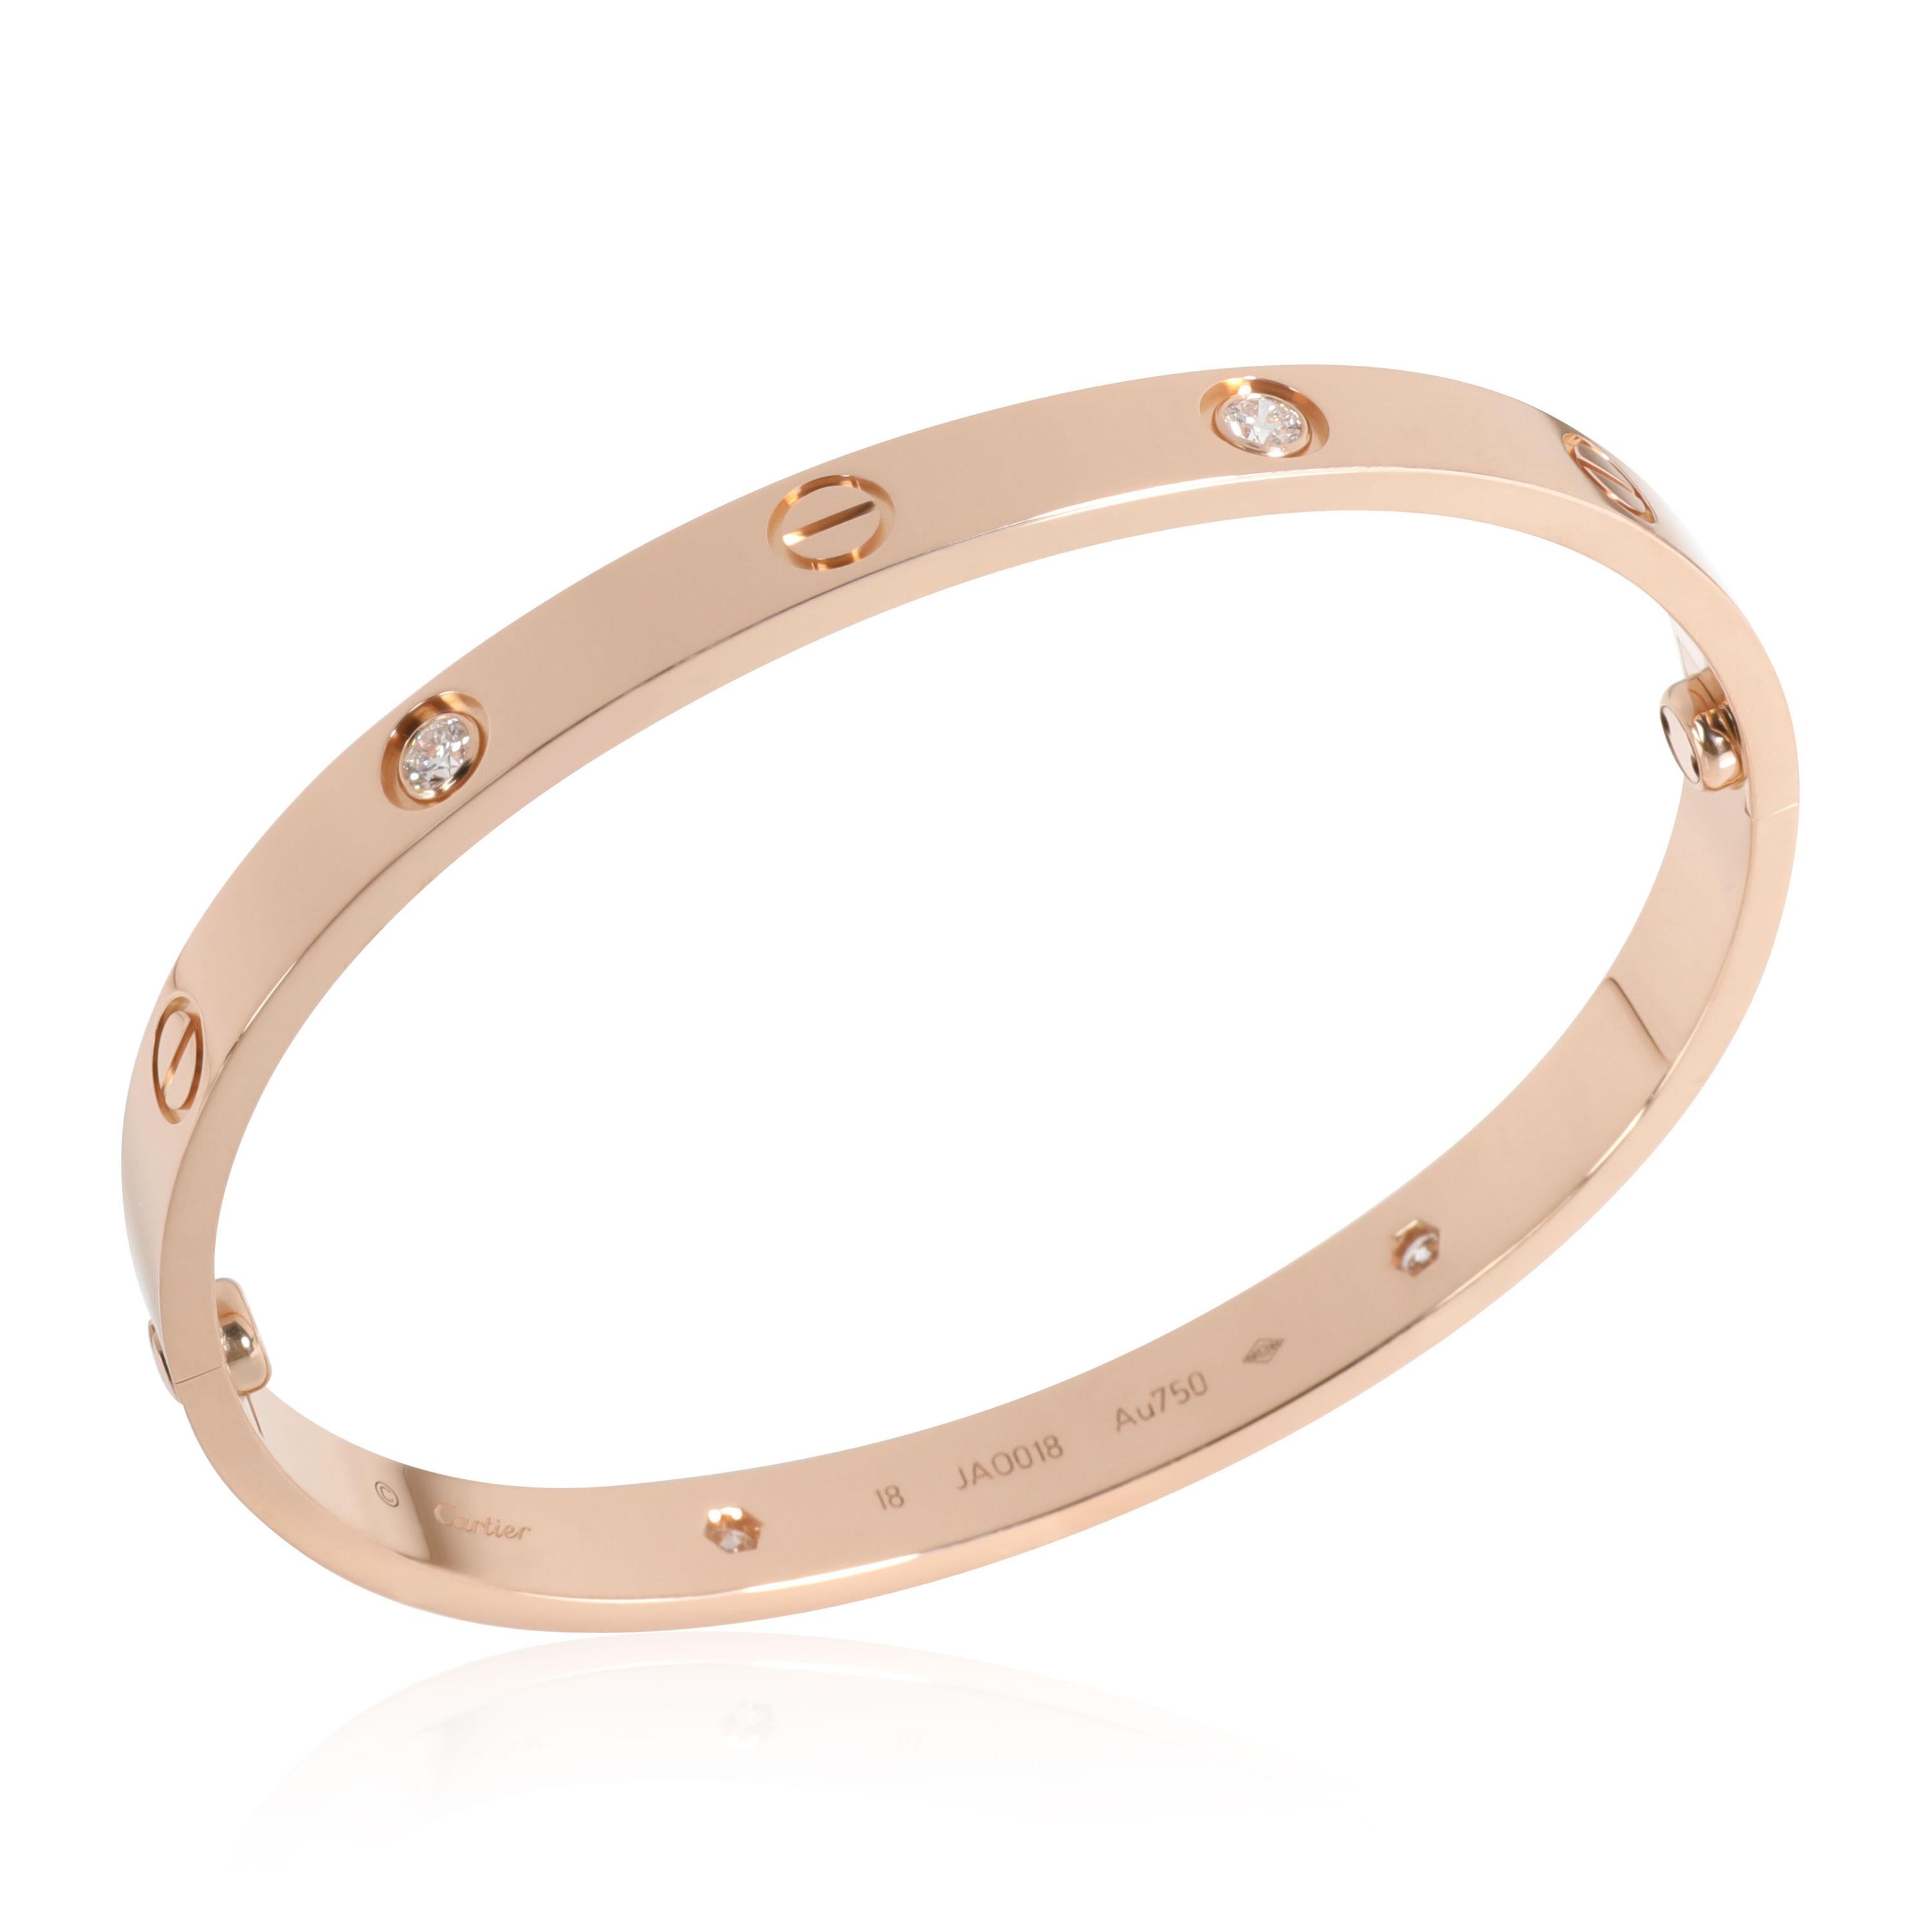 pre-owned cartier love diamond bracelet in 18k rose gold 0.21 ctw in rose gold-tone